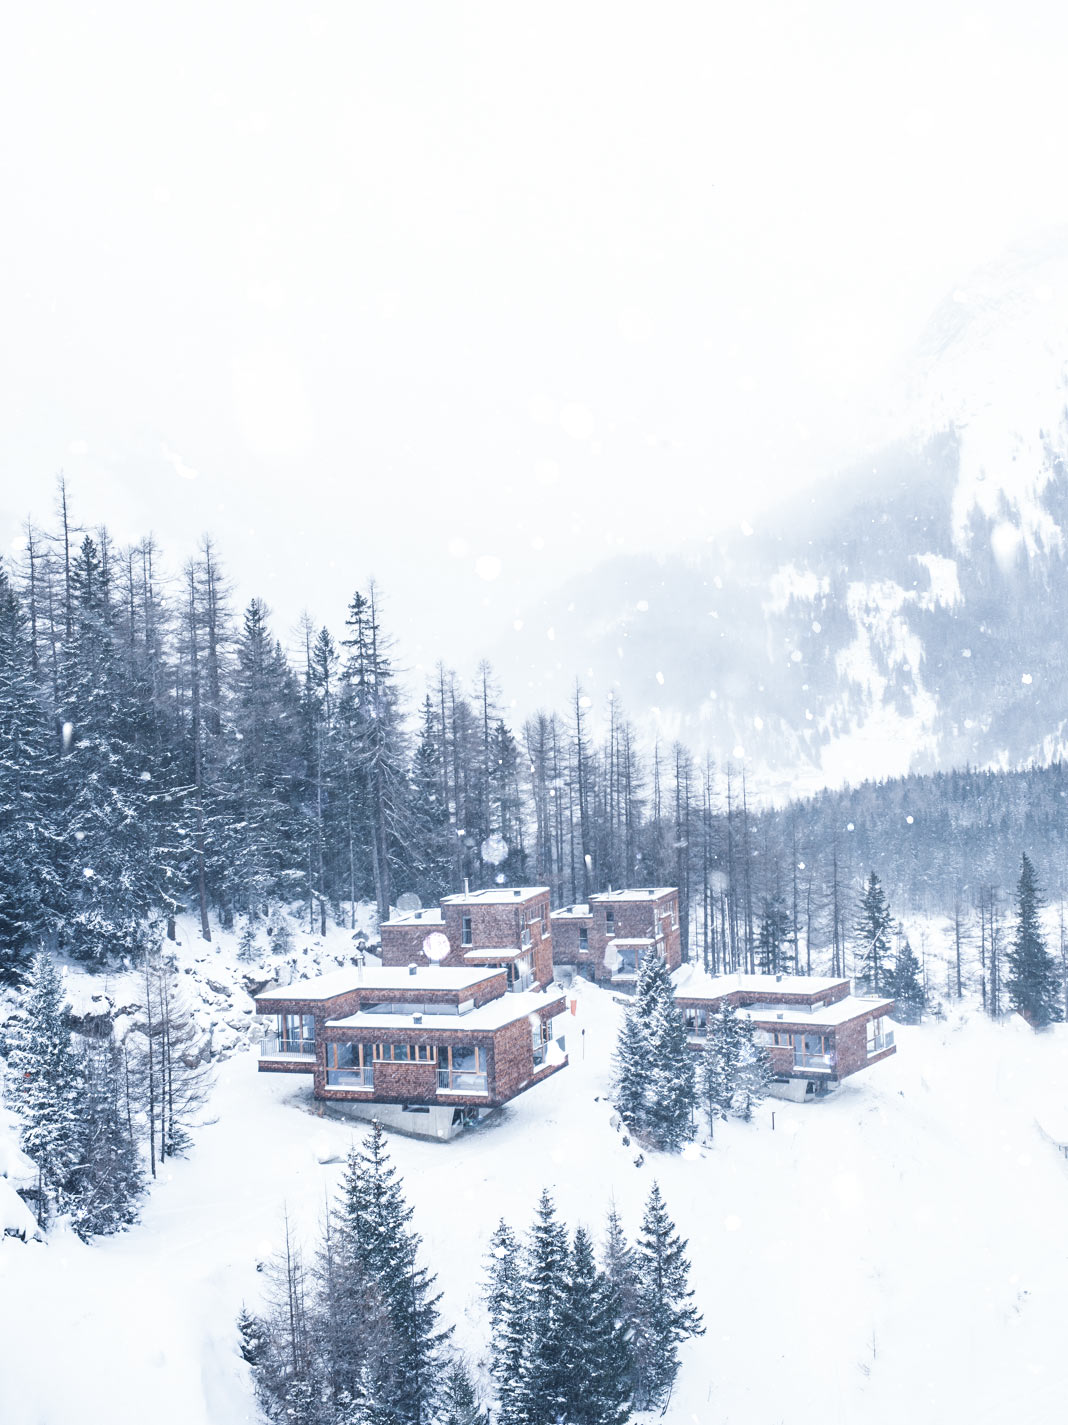 Pretty Hotels: Gradonna Mountain Resort (Image 2)